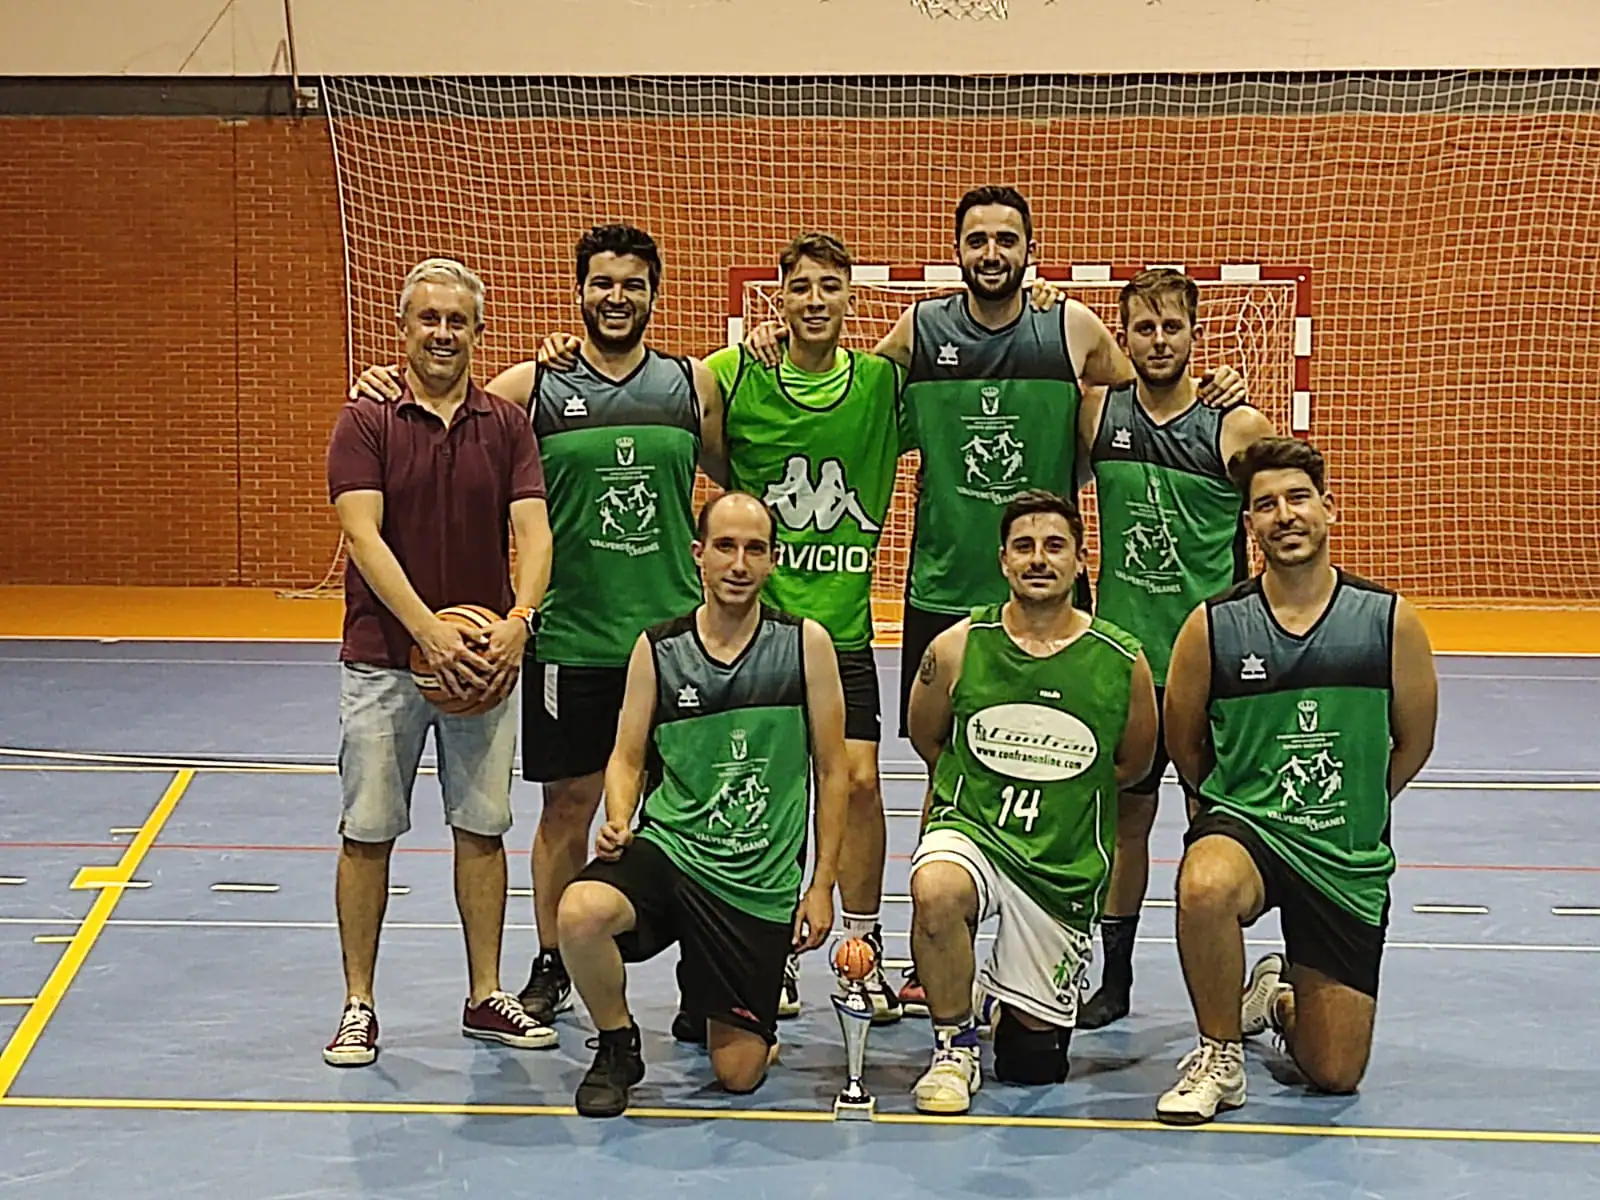 Equipo de baloncesto de Valverde de Leganés